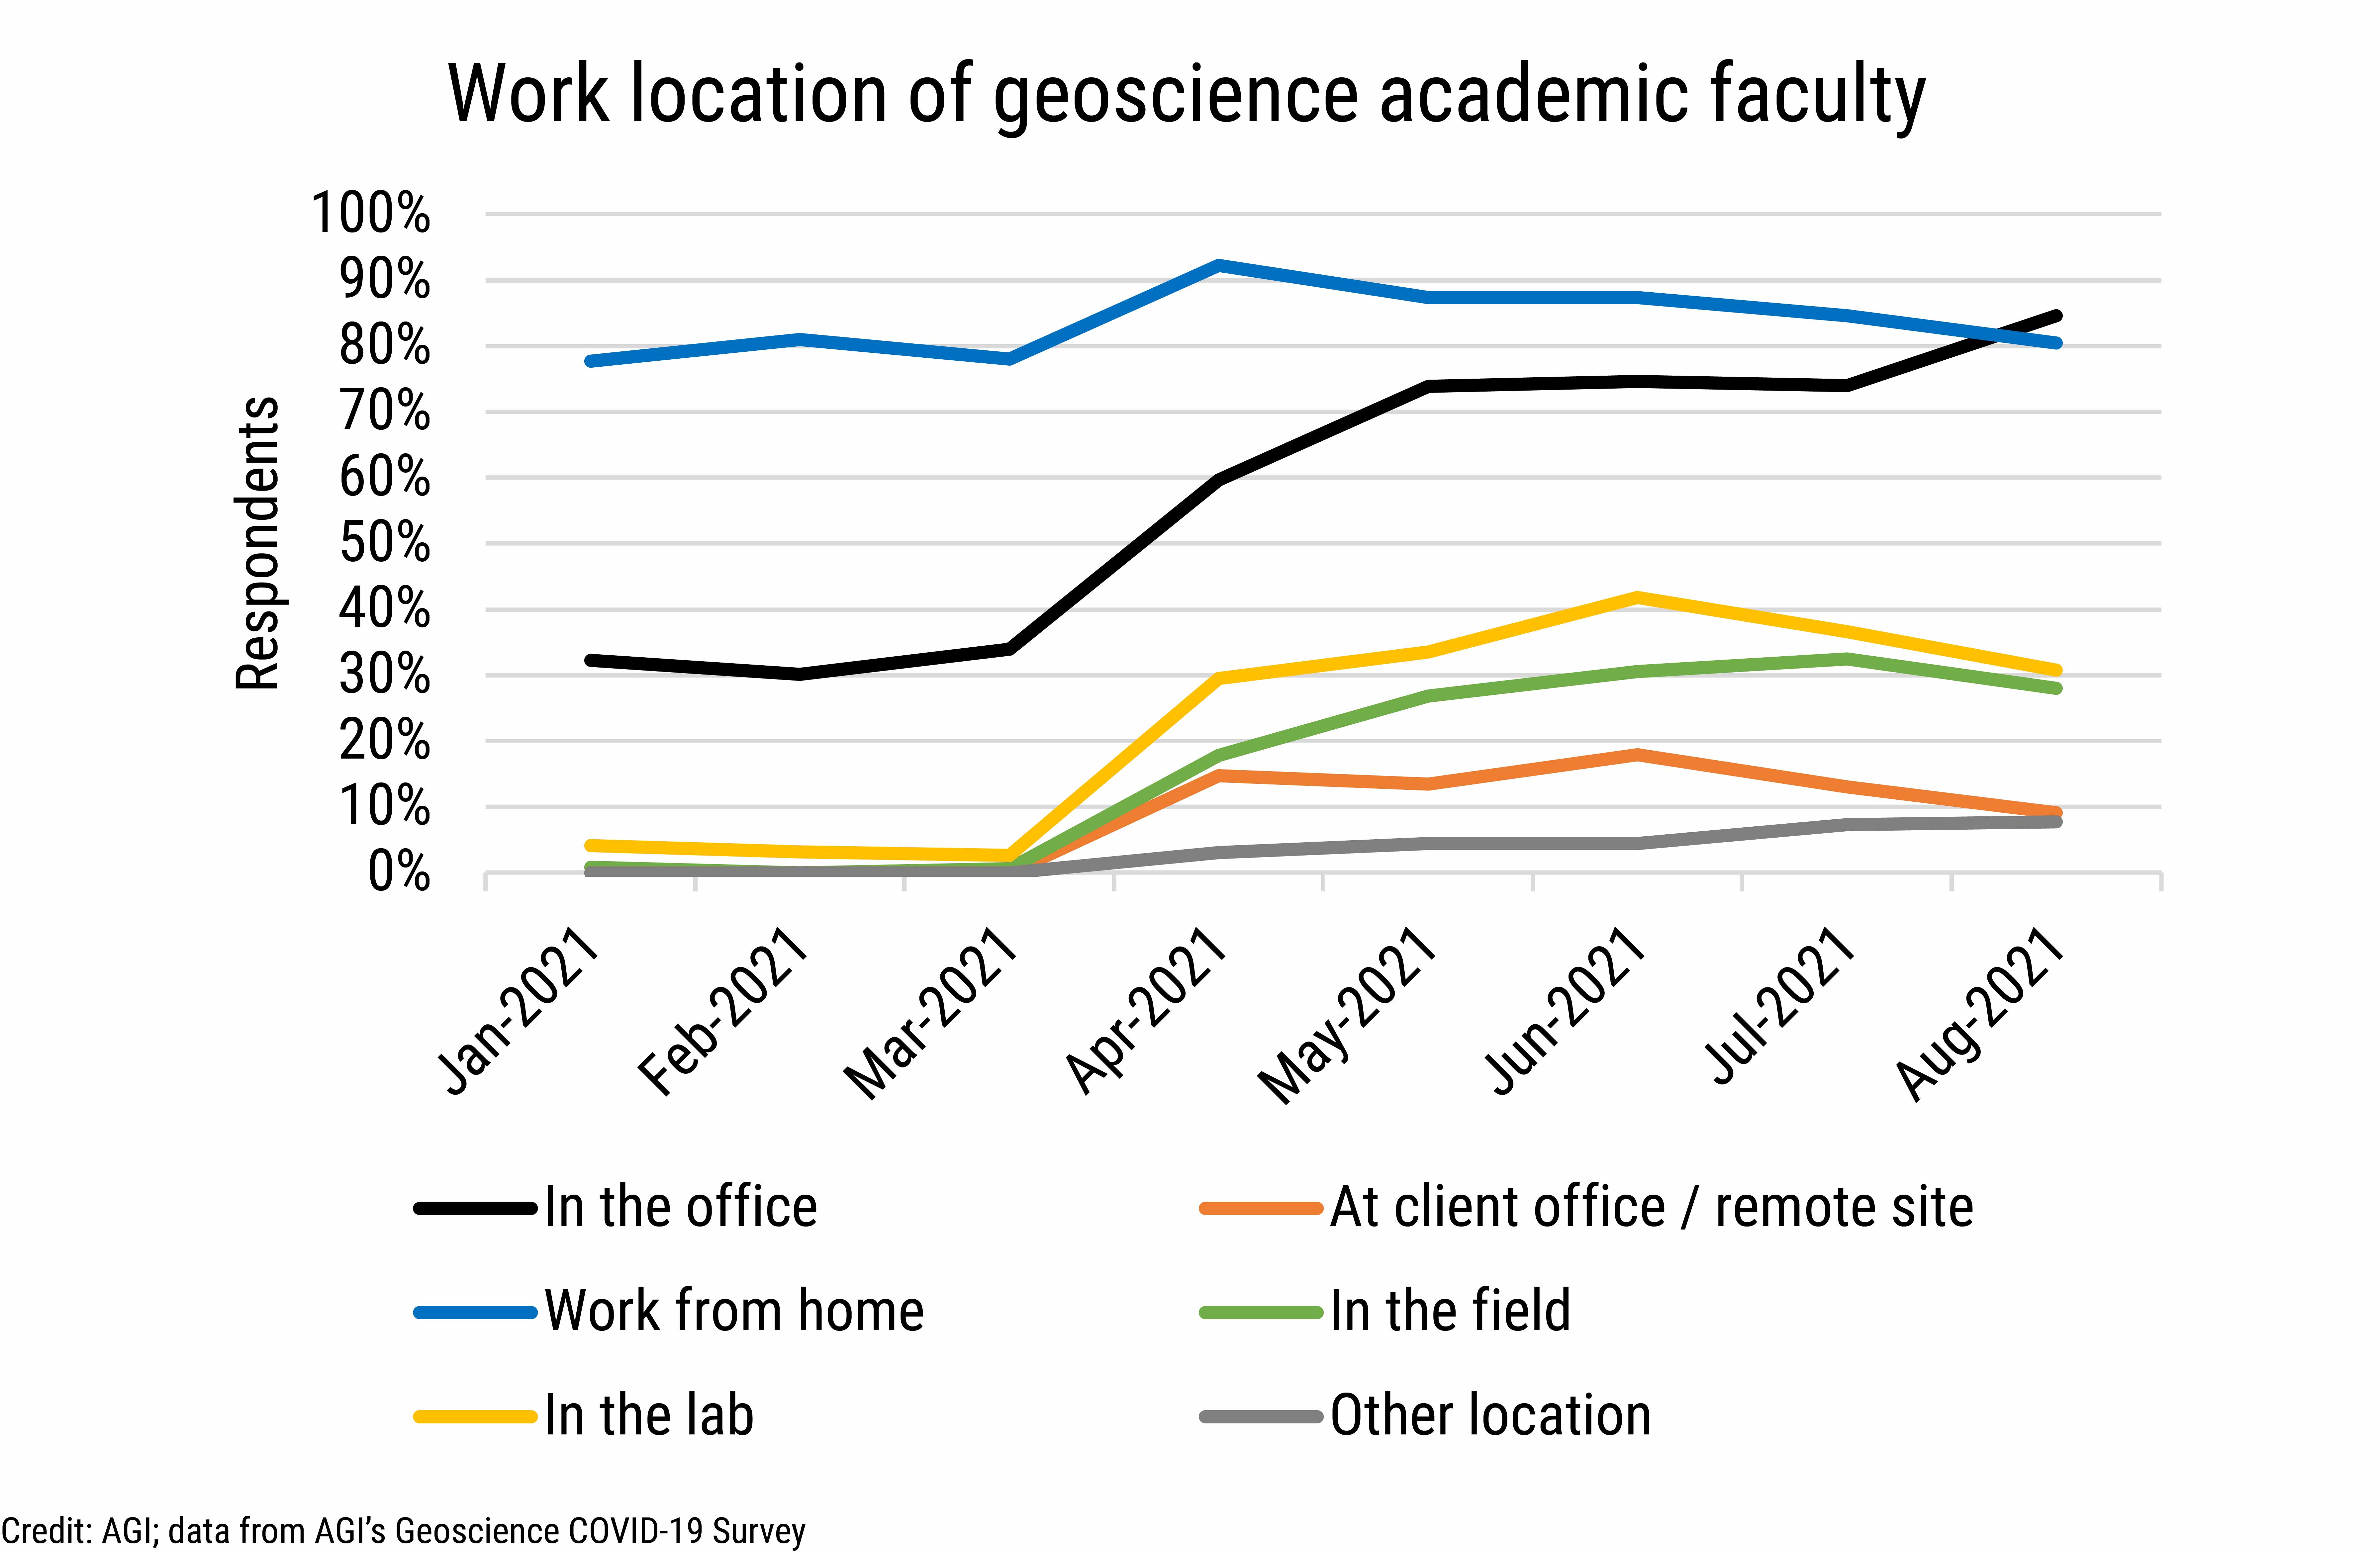 DB_2021-028 chart 05: Work location of geoscience academic faculty (Credit: AGI; data from AGI's Geoscience COVID-19 Survey)